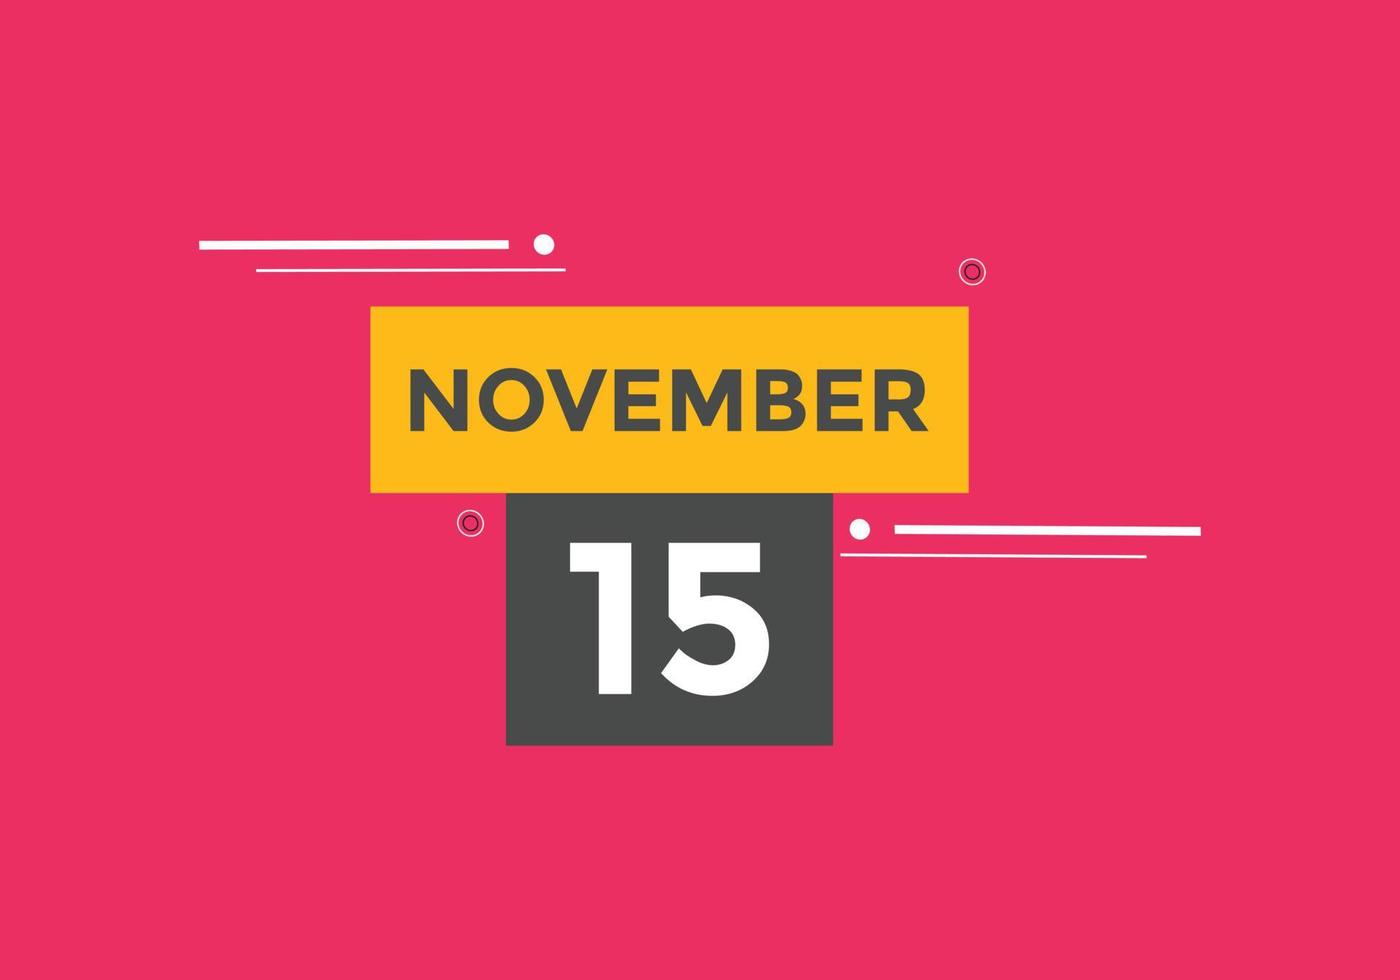 15. November Kalendererinnerung. 15. november tägliche kalendersymbolvorlage. Kalender 15. November Icon-Design-Vorlage. Vektor-Illustration vektor